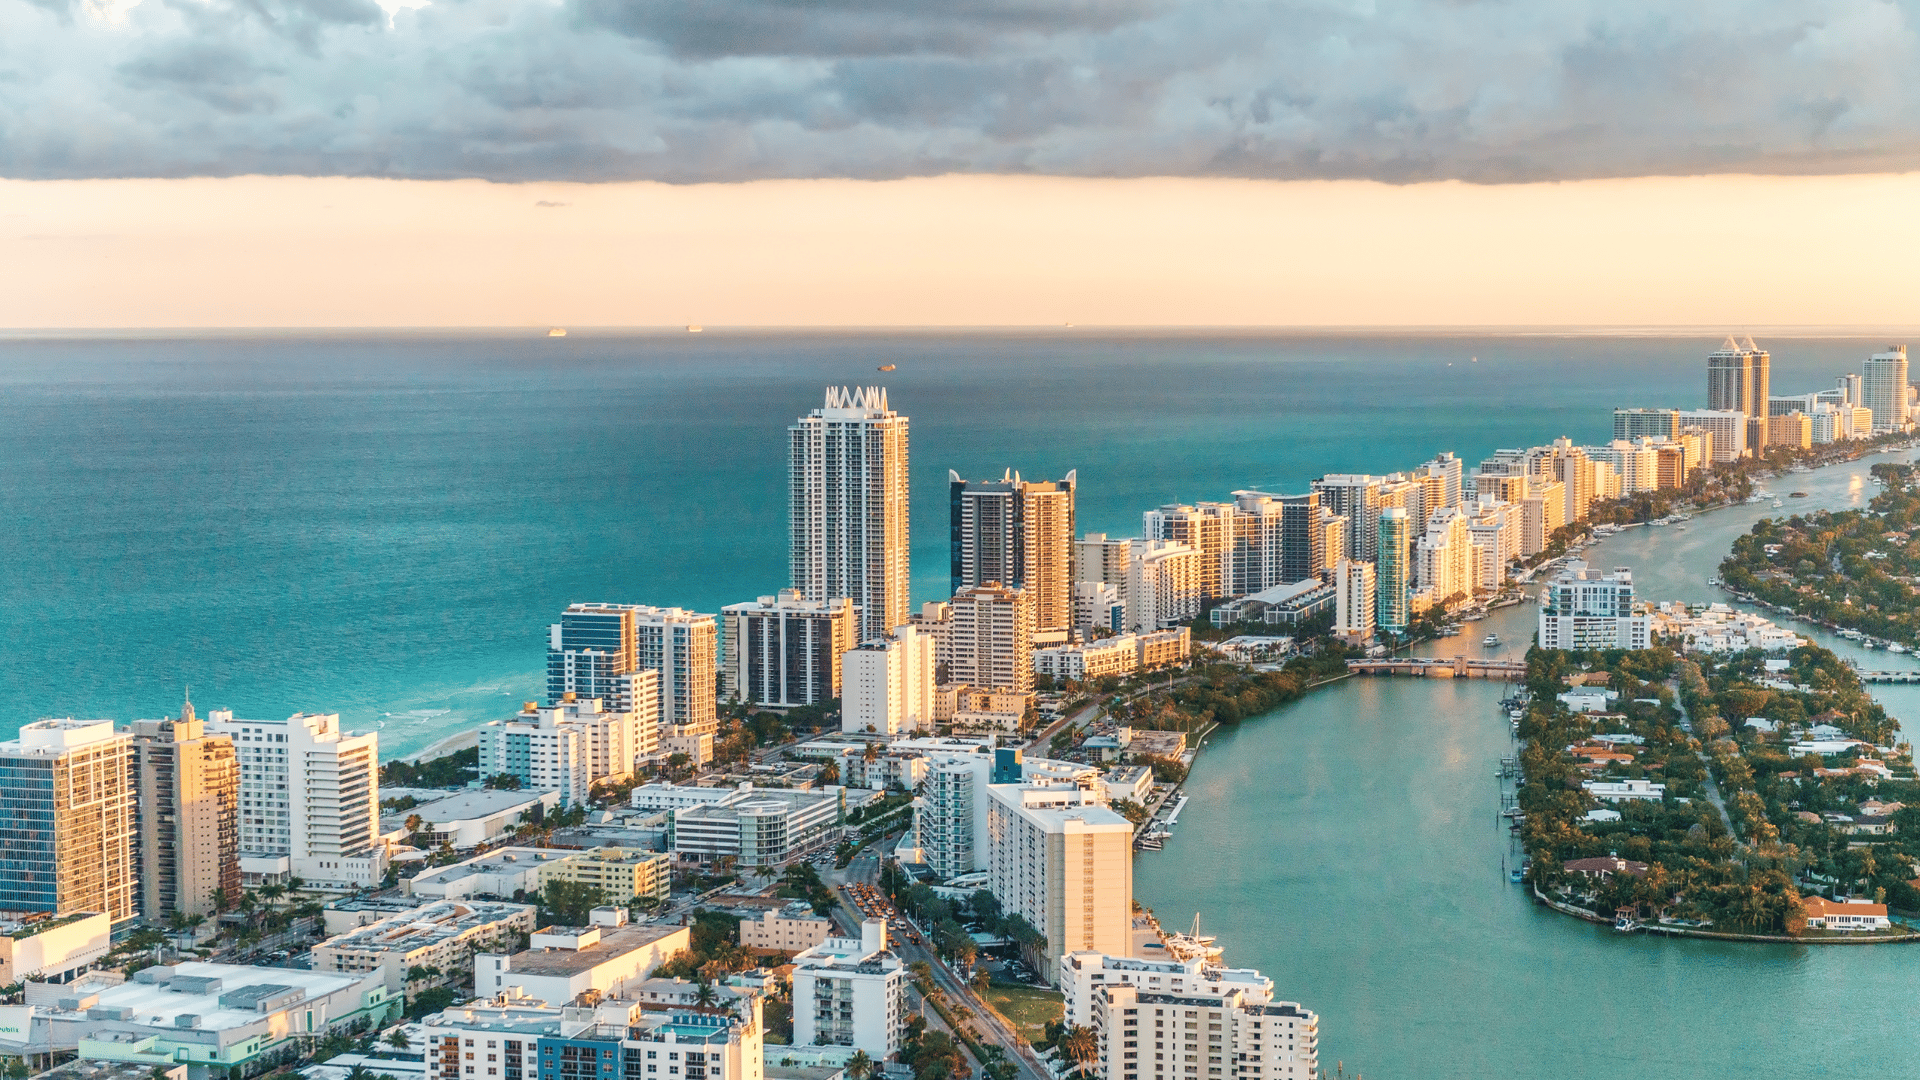 Miami: The Magic City of Sun, Sand, and Culture